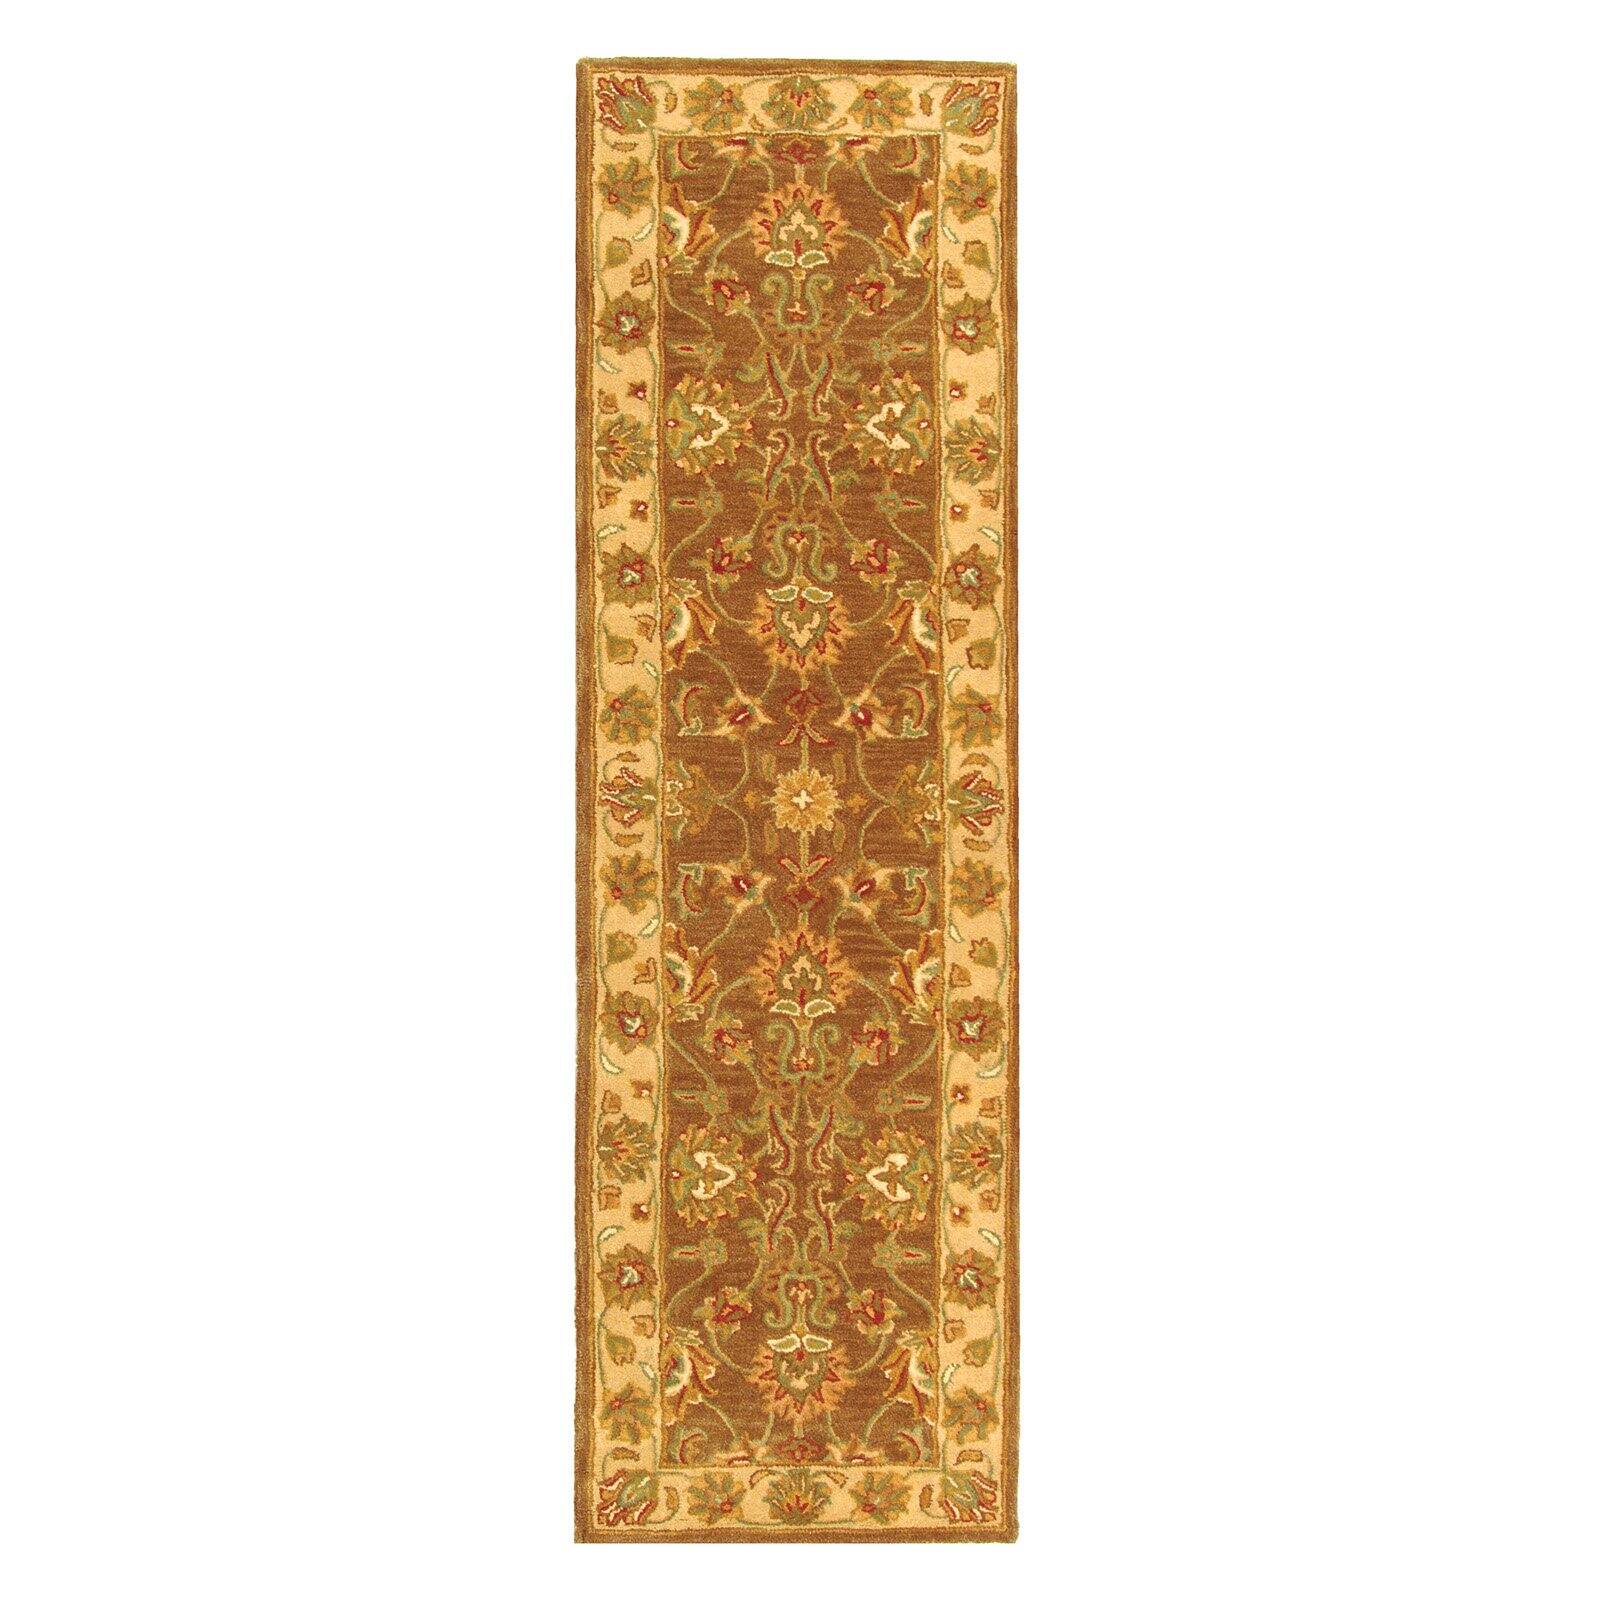 SAFAVIEH Heritage Regis Traditional Wool Area Rug, Brown/Ivory, 3'6" x 3'6" Round - image 3 of 9